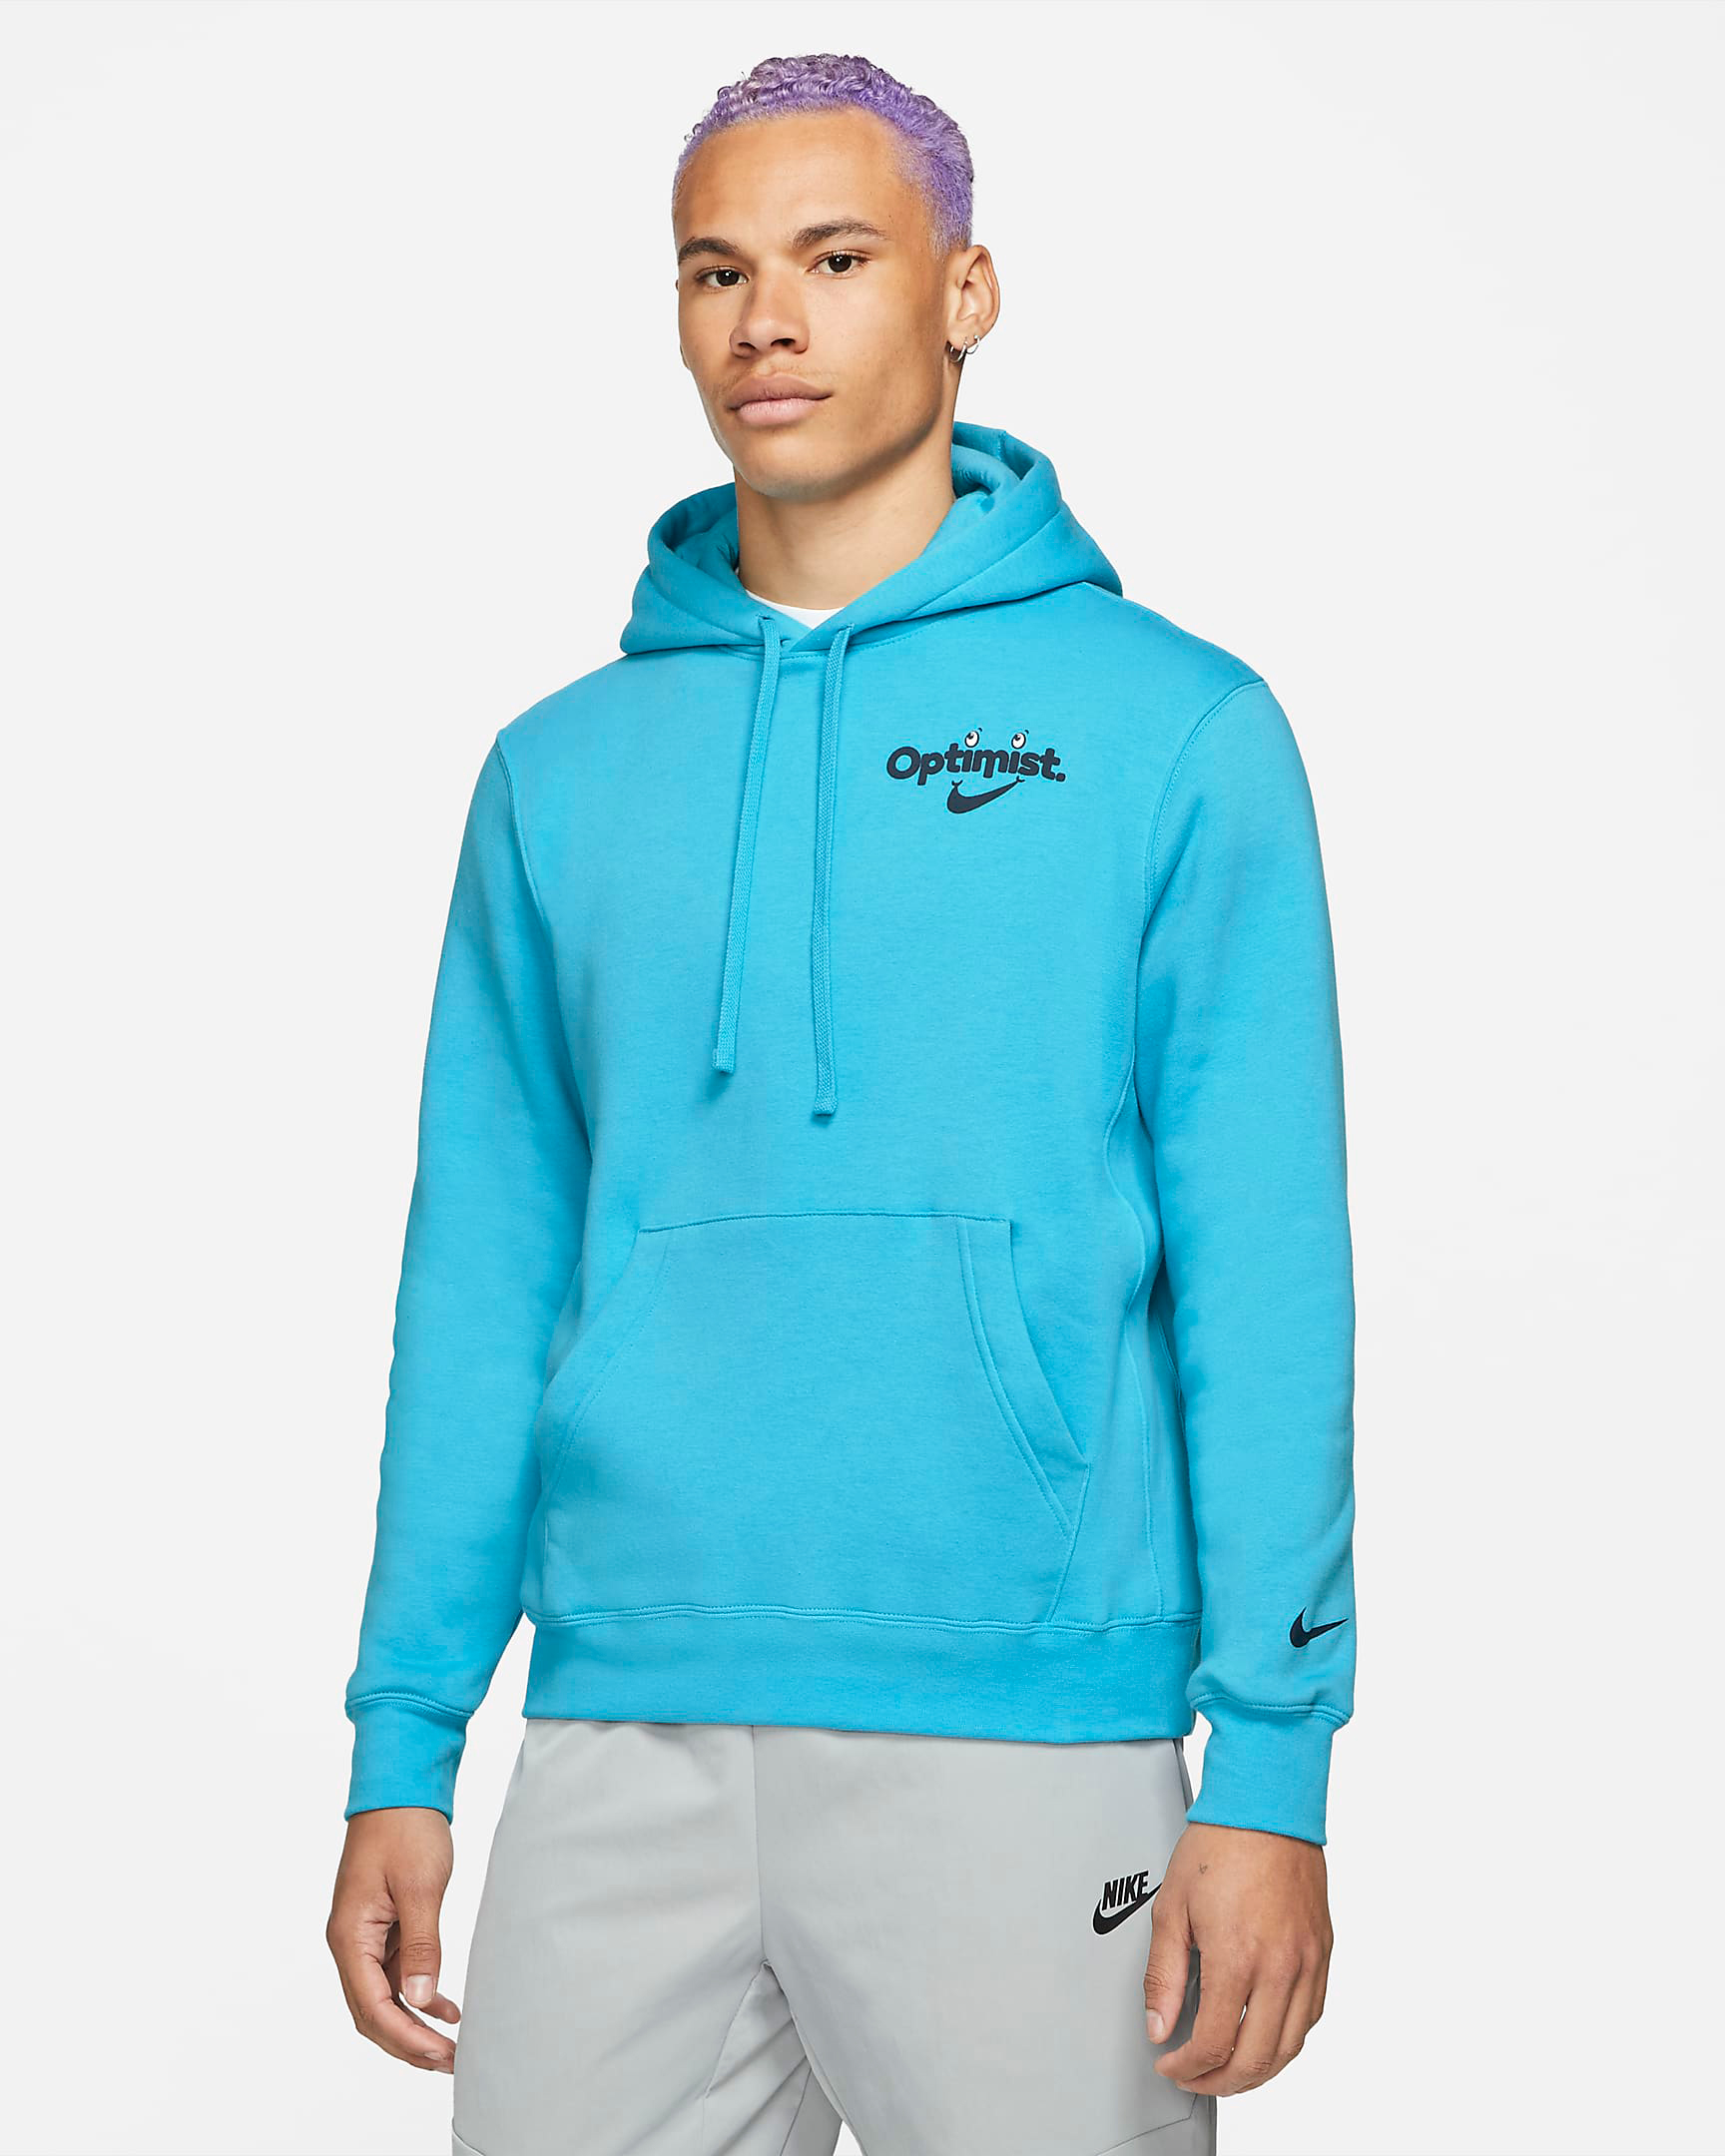 nike-sportswear-optimist-hoodie-light-blue-fury-1